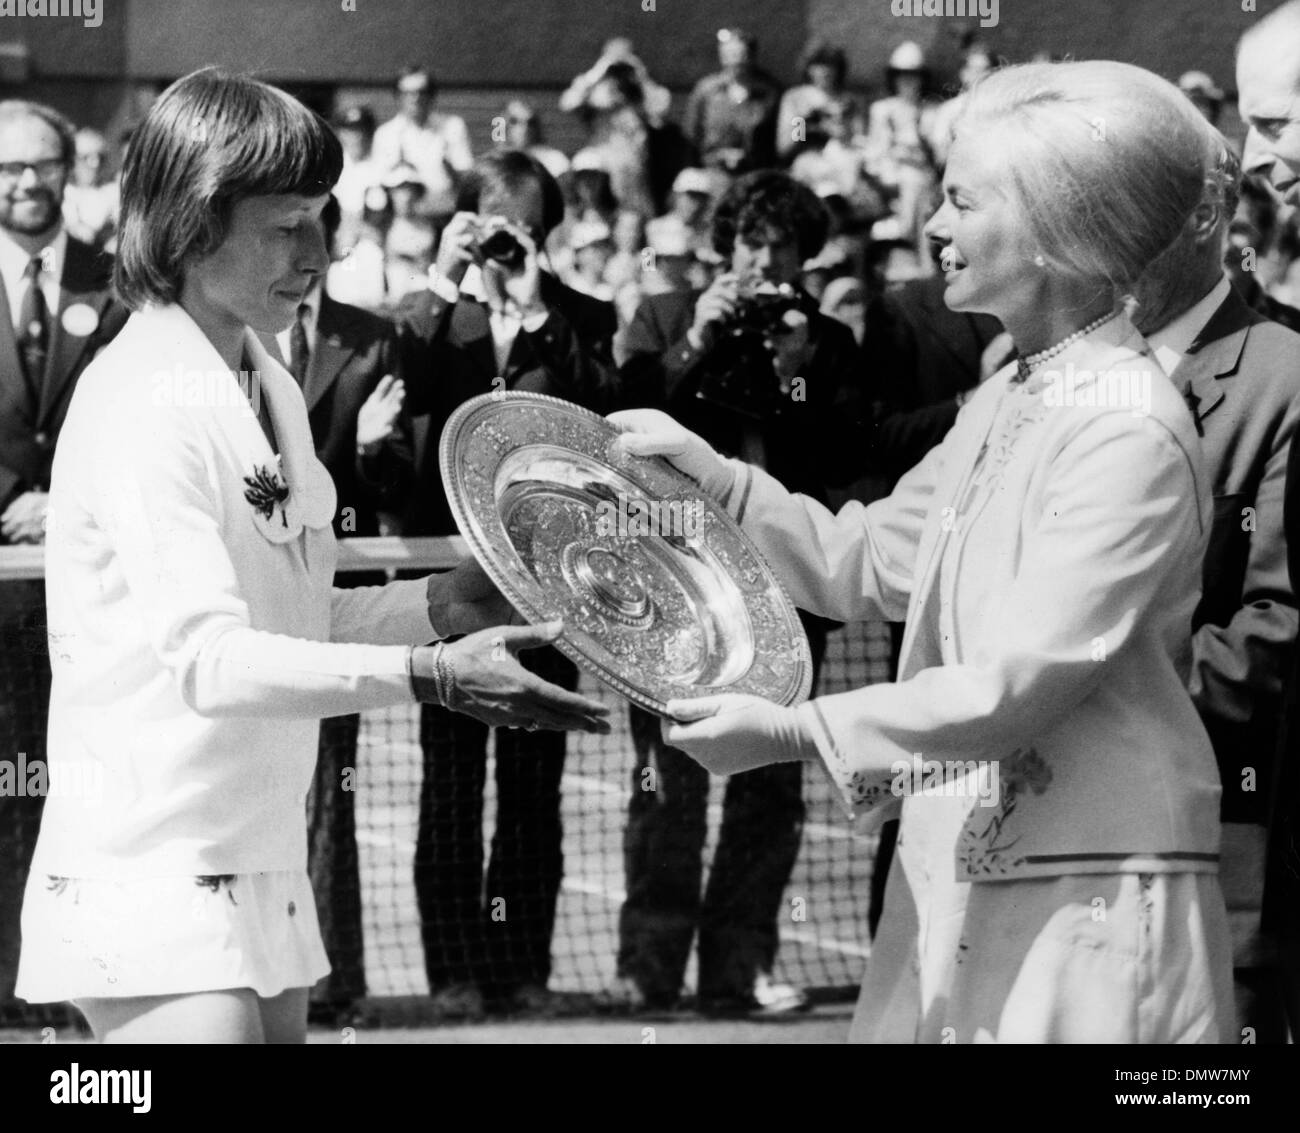 July 5, 1979 - London, England, U.K. - Tennis star MARTINA NAVRATILOVA receives her trophy from the DUCHESS OF KENT after beting Chris Lloyd at the Wimbledon Championships. (Credit Image: © KEYSTONE Pictures USA/ZUMAPRESS.com) Stock Photo